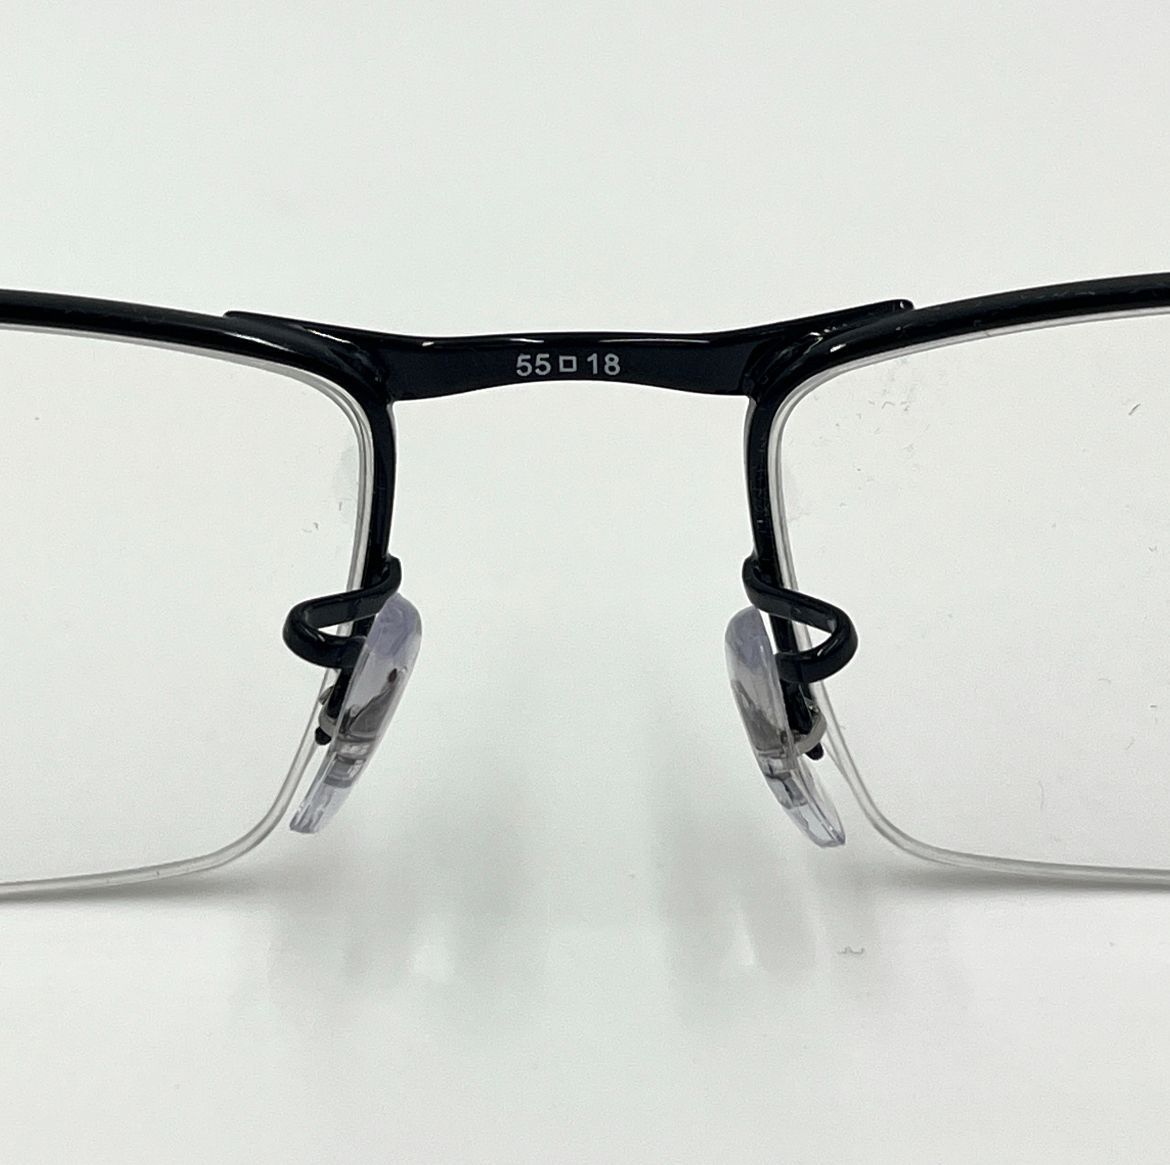 RayBan レイバン メガネ 眼鏡 フレーム メガネフレーム メンズ メタル